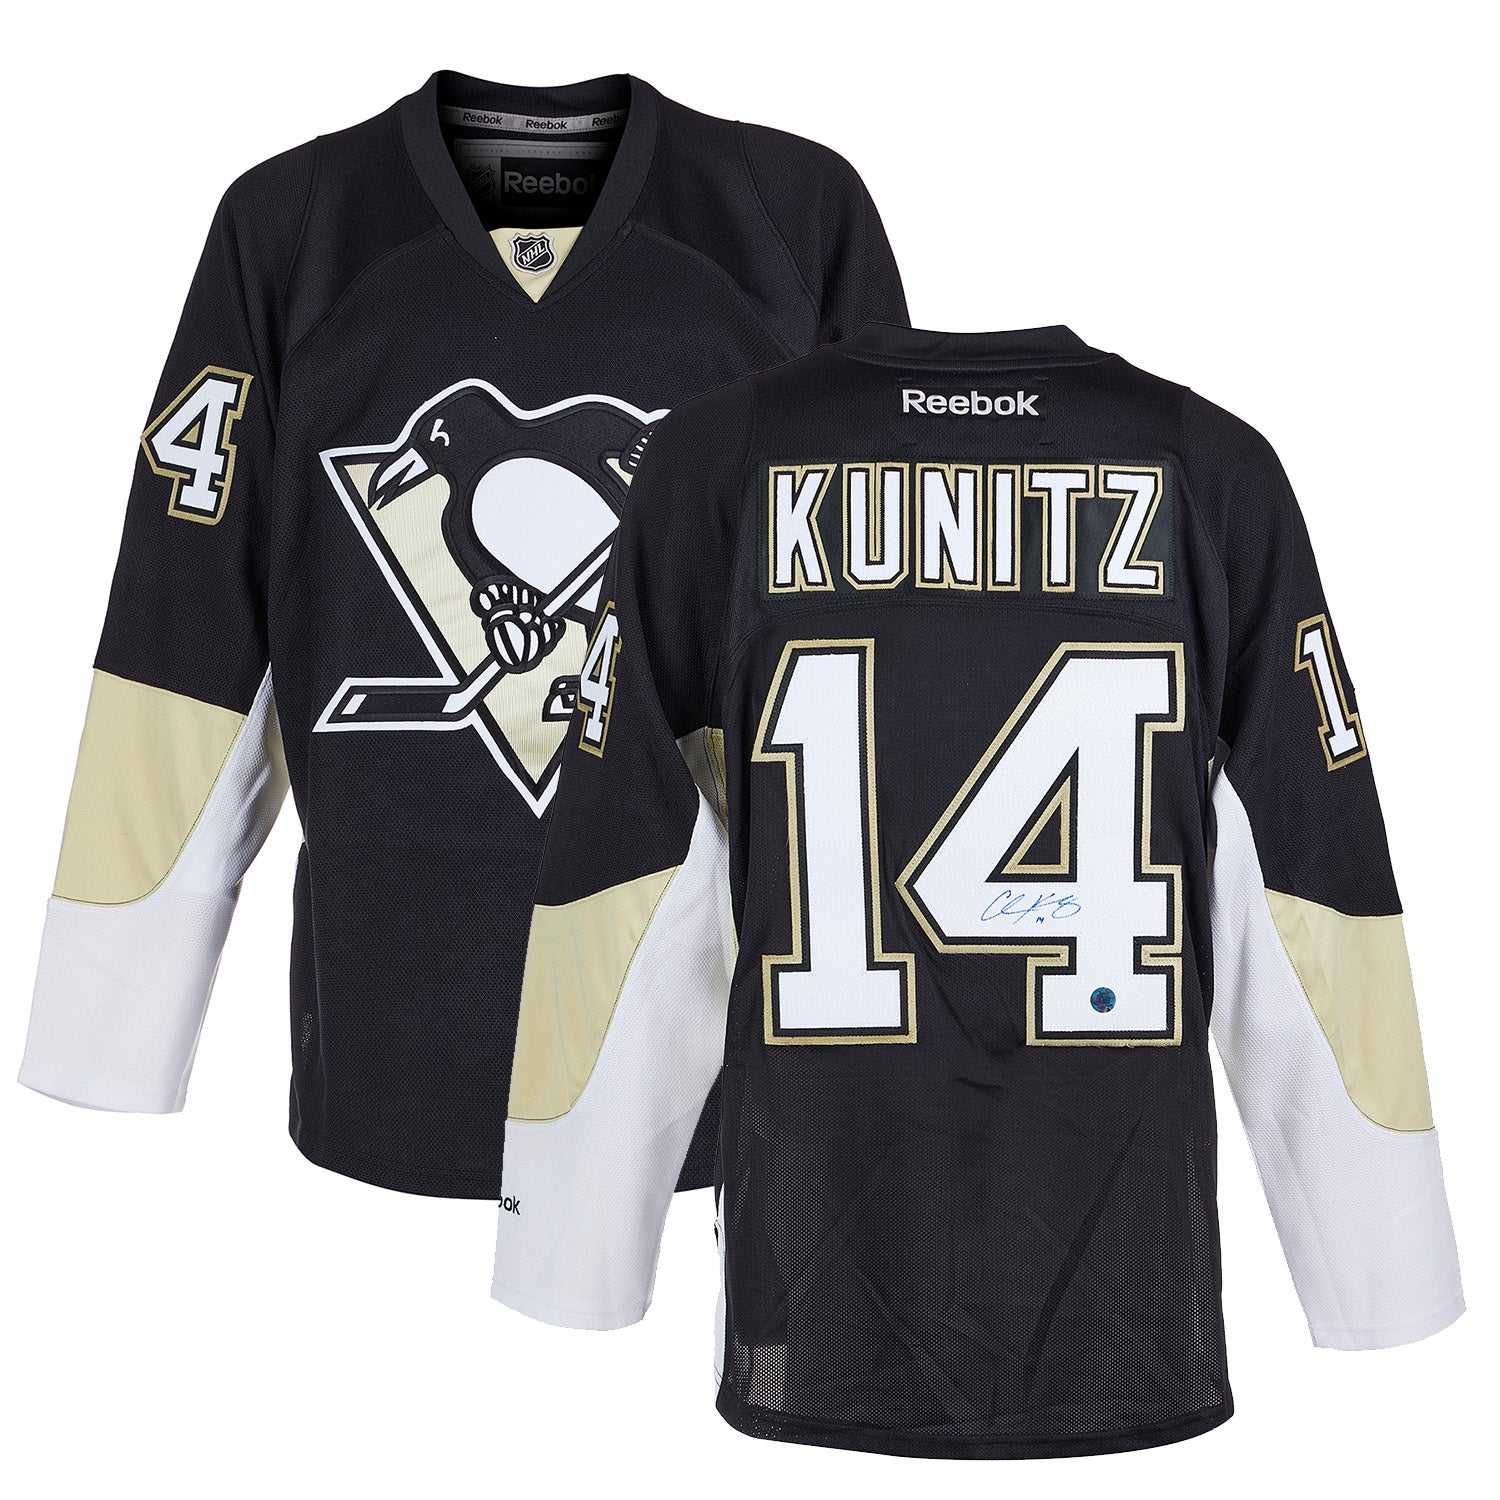 Chris Kunitz Autographed Pittsburgh Penguins Reebok Vintage Jersey